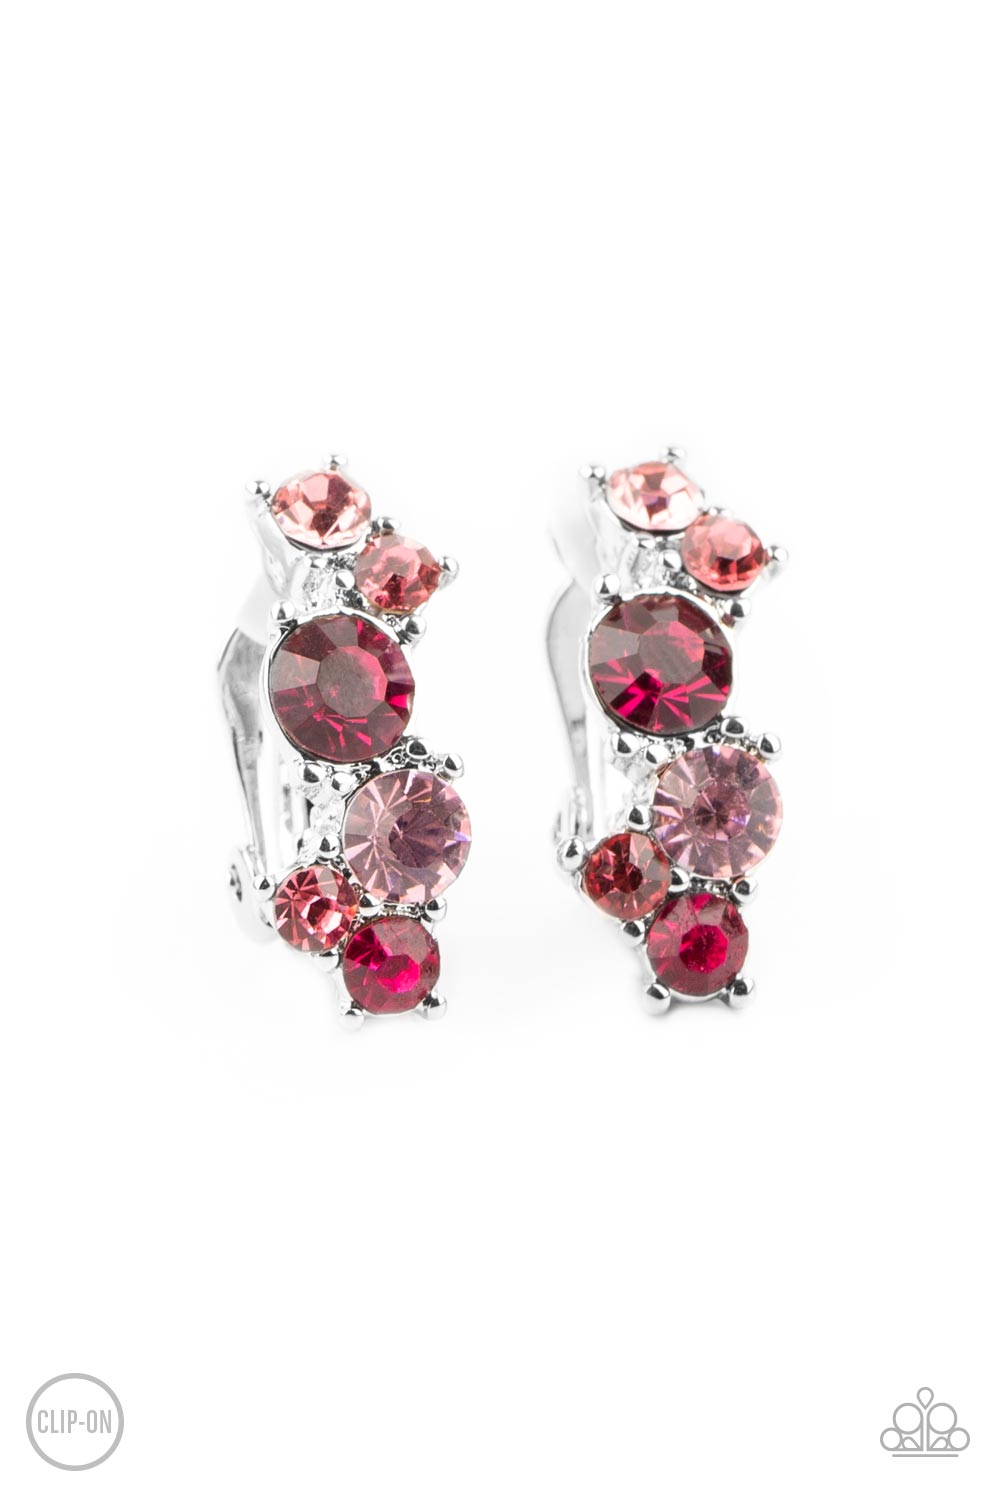 Cosmic Celebration - Pink Clip-On Earrings - Princess Glam Shop